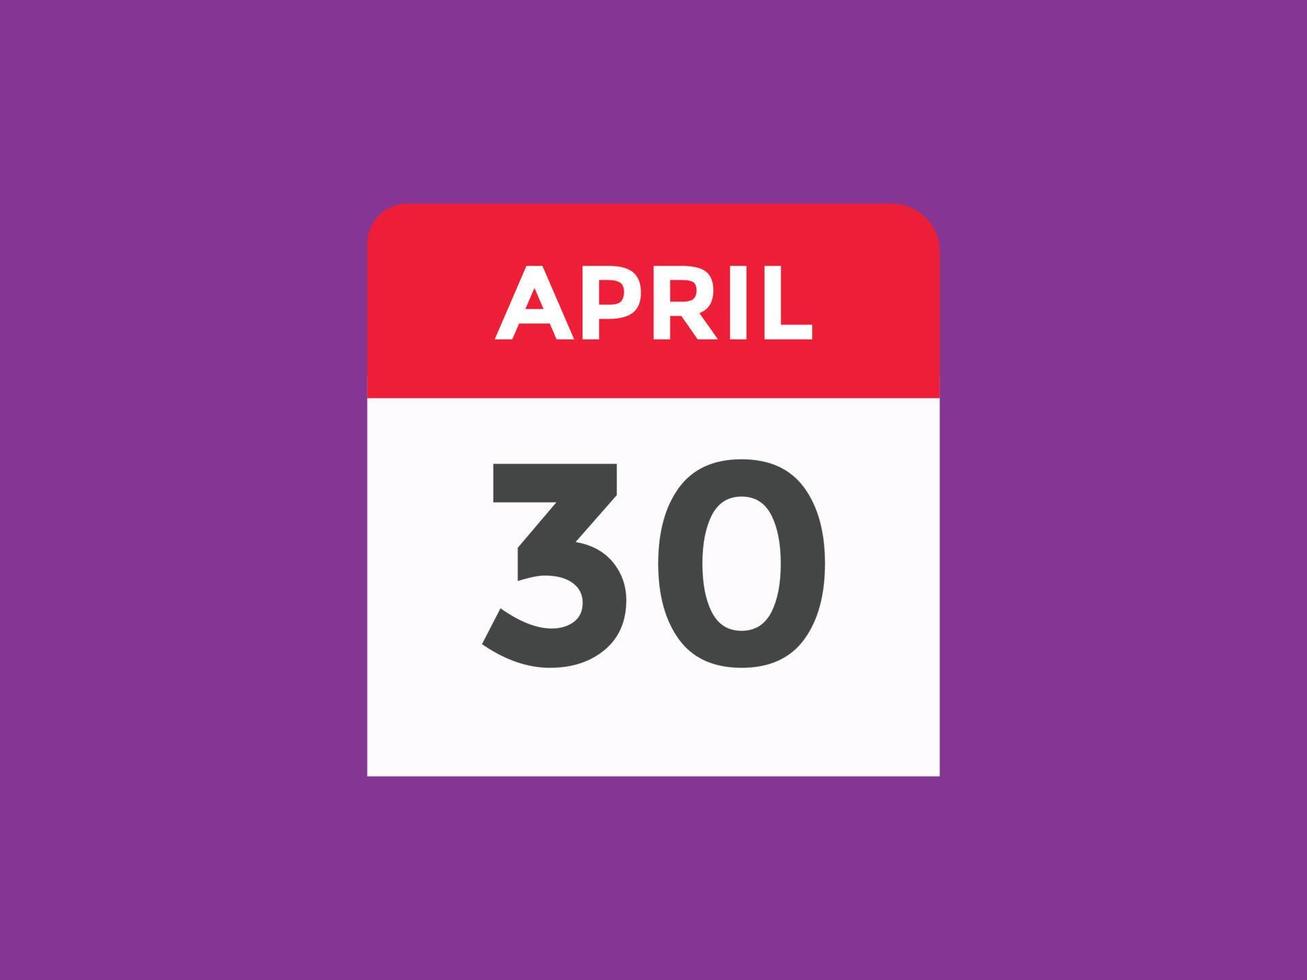 april 30 calendar reminder. 30th april daily calendar icon template. Calendar 30th april icon Design template. Vector illustration